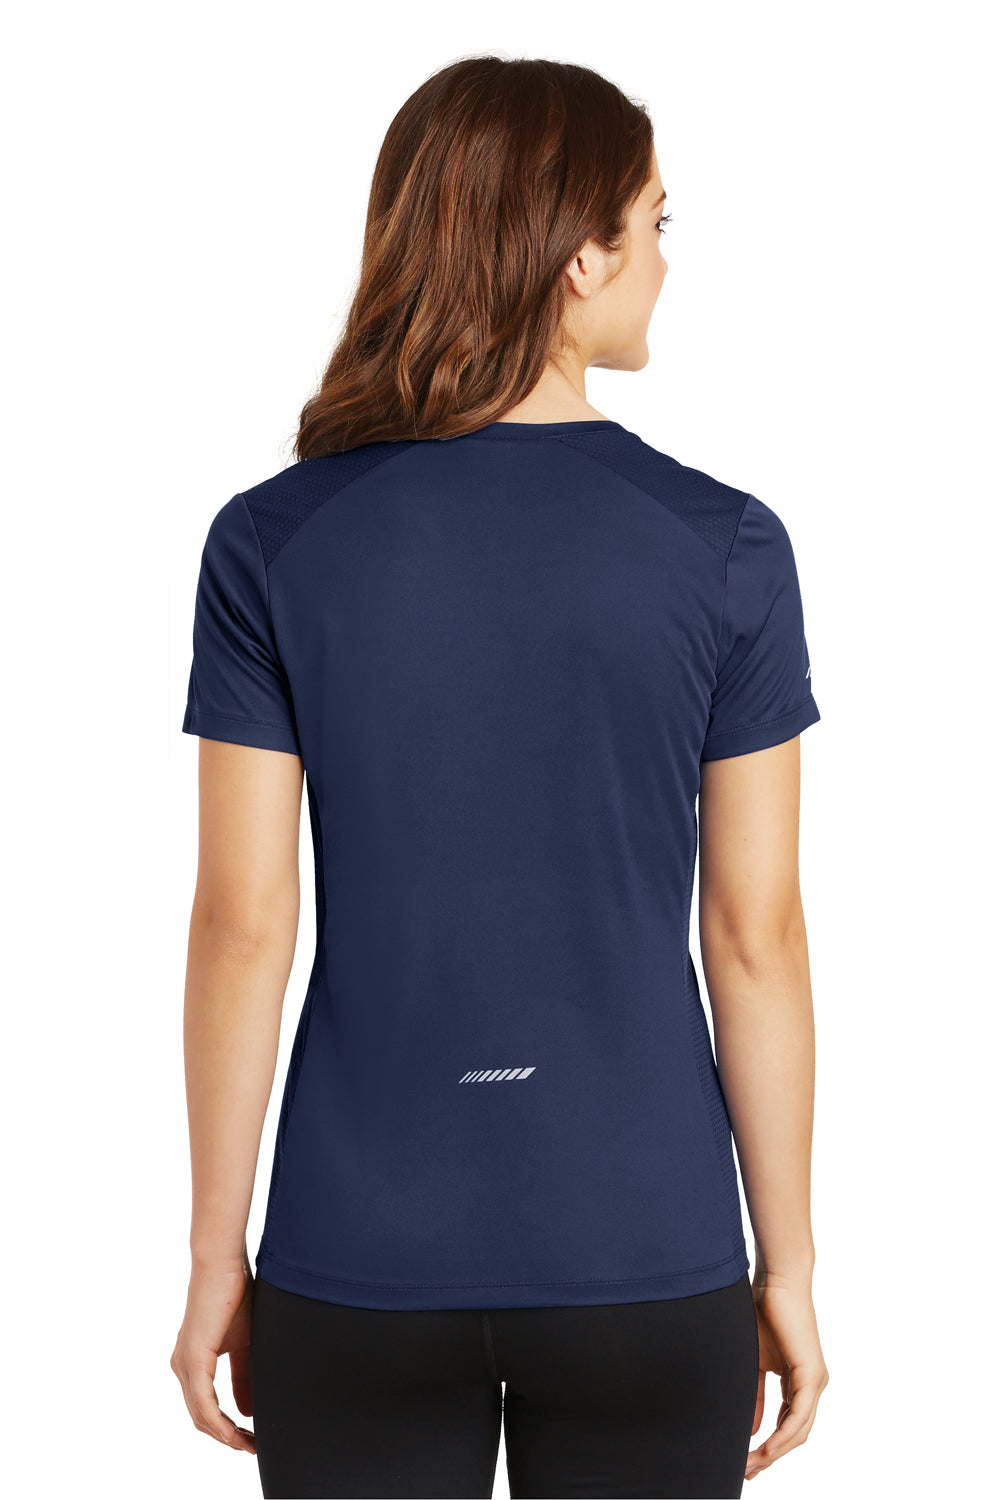 Sport-Tek LST380 Womens Elevate Moisture Wicking Short Sleeve Scoop Neck T-Shirt Navy Blue Back